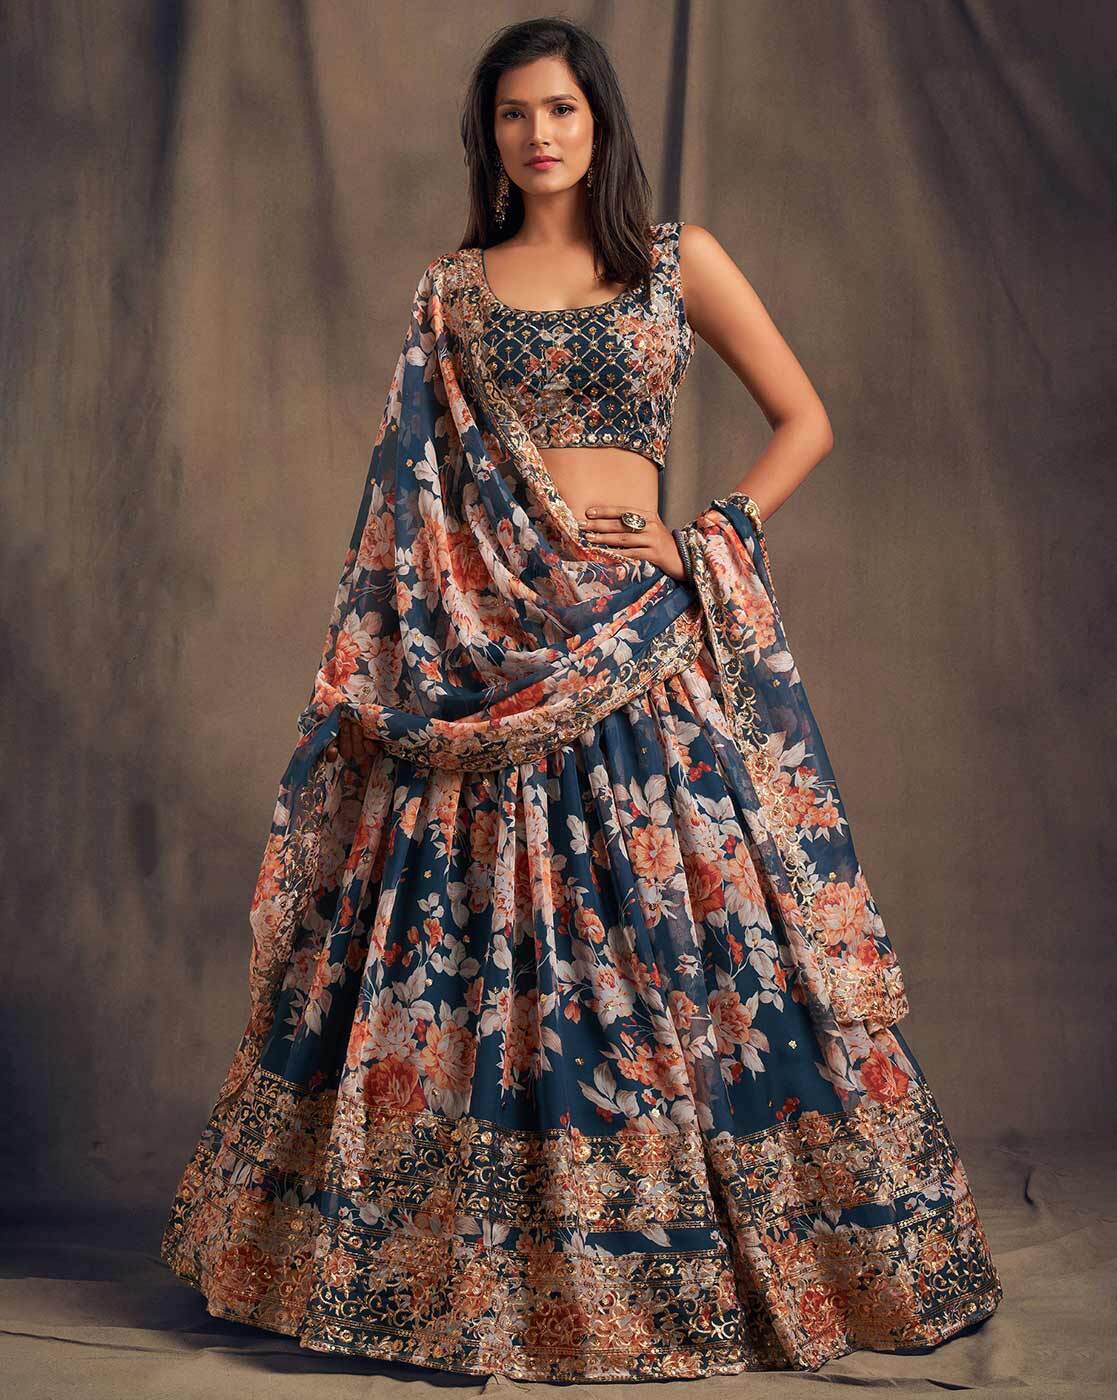 Wedding Wear Printed Cotton Lehenga Choli at Rs 1600 in Jaipur | ID:  2850336546397